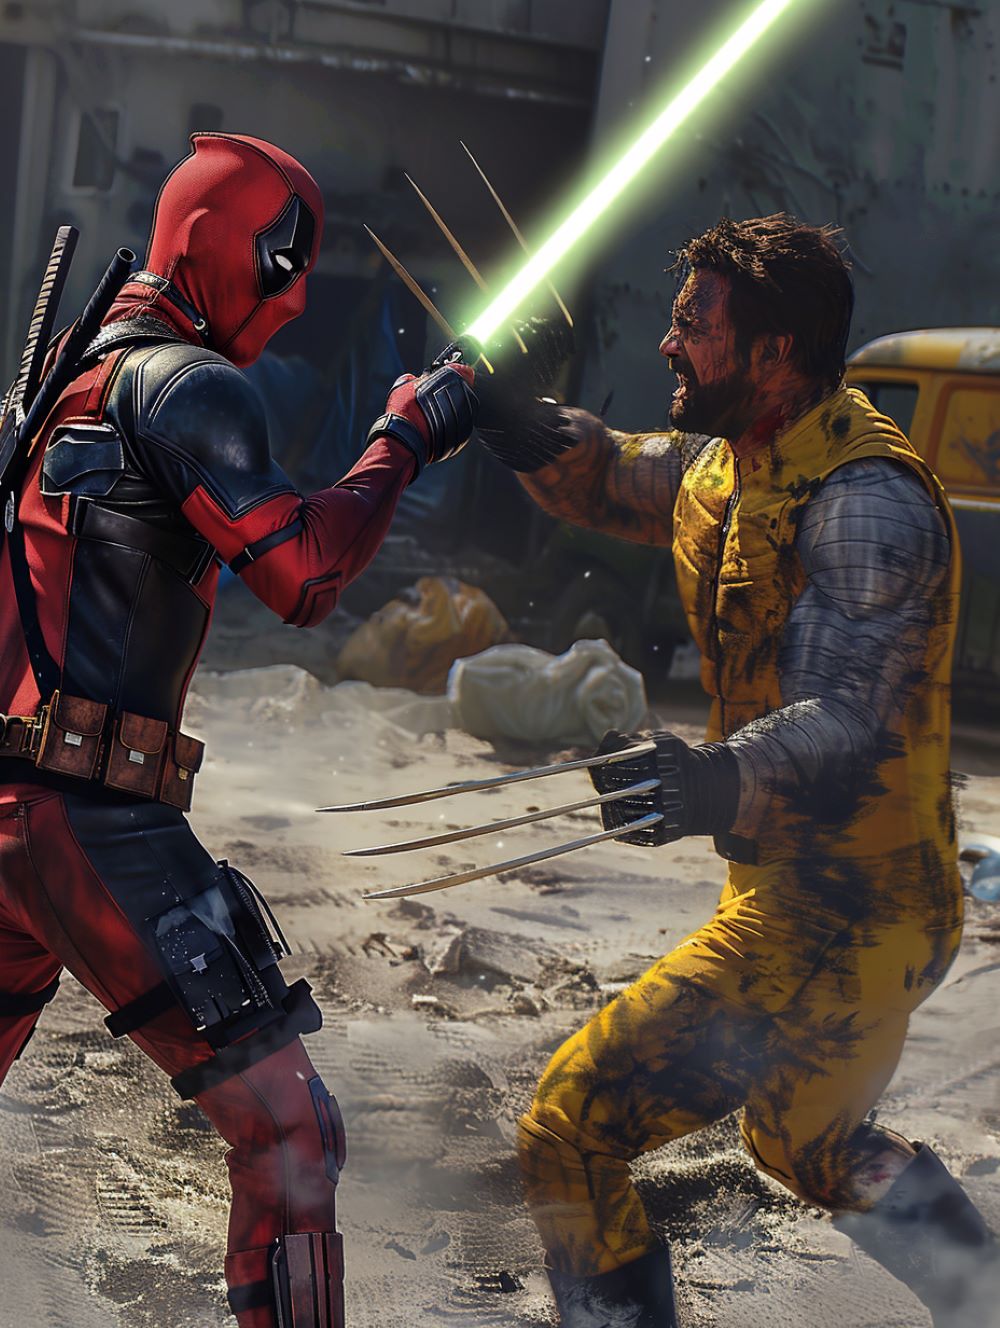 a Deadpool welding a green lightsaber and attack Wolverine